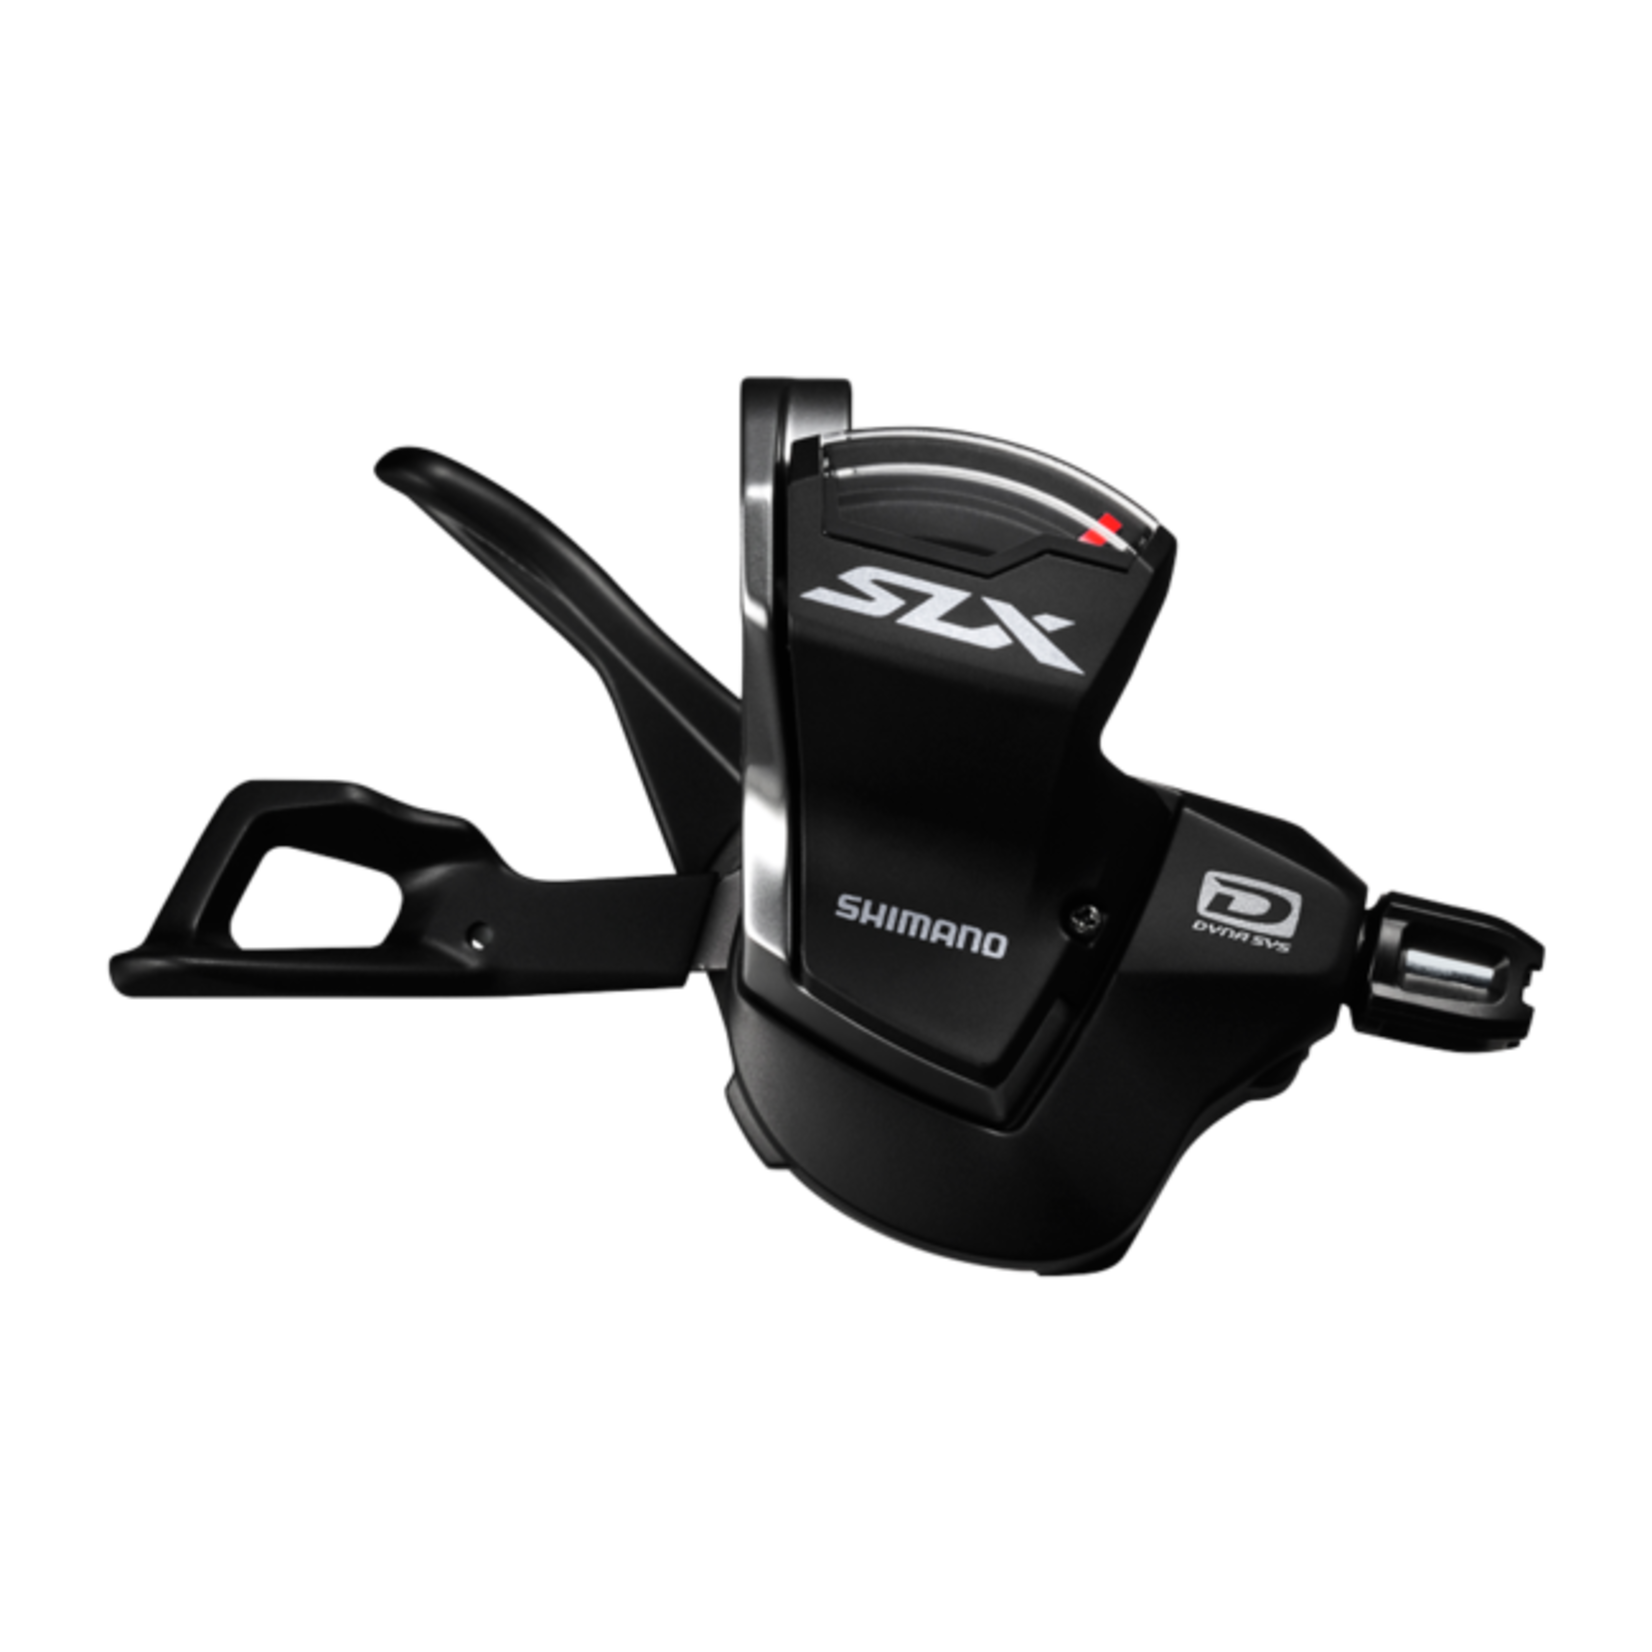 Shimano SLX SL-M7000 11-Speed Right Shifter